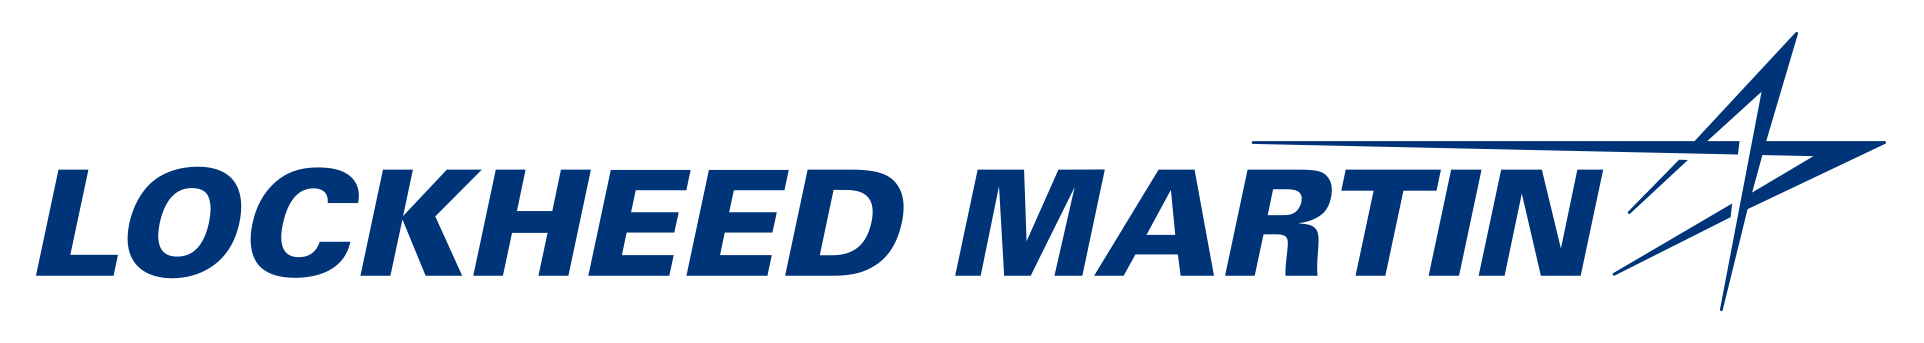 Lockheed Martin logo in blue corporate color